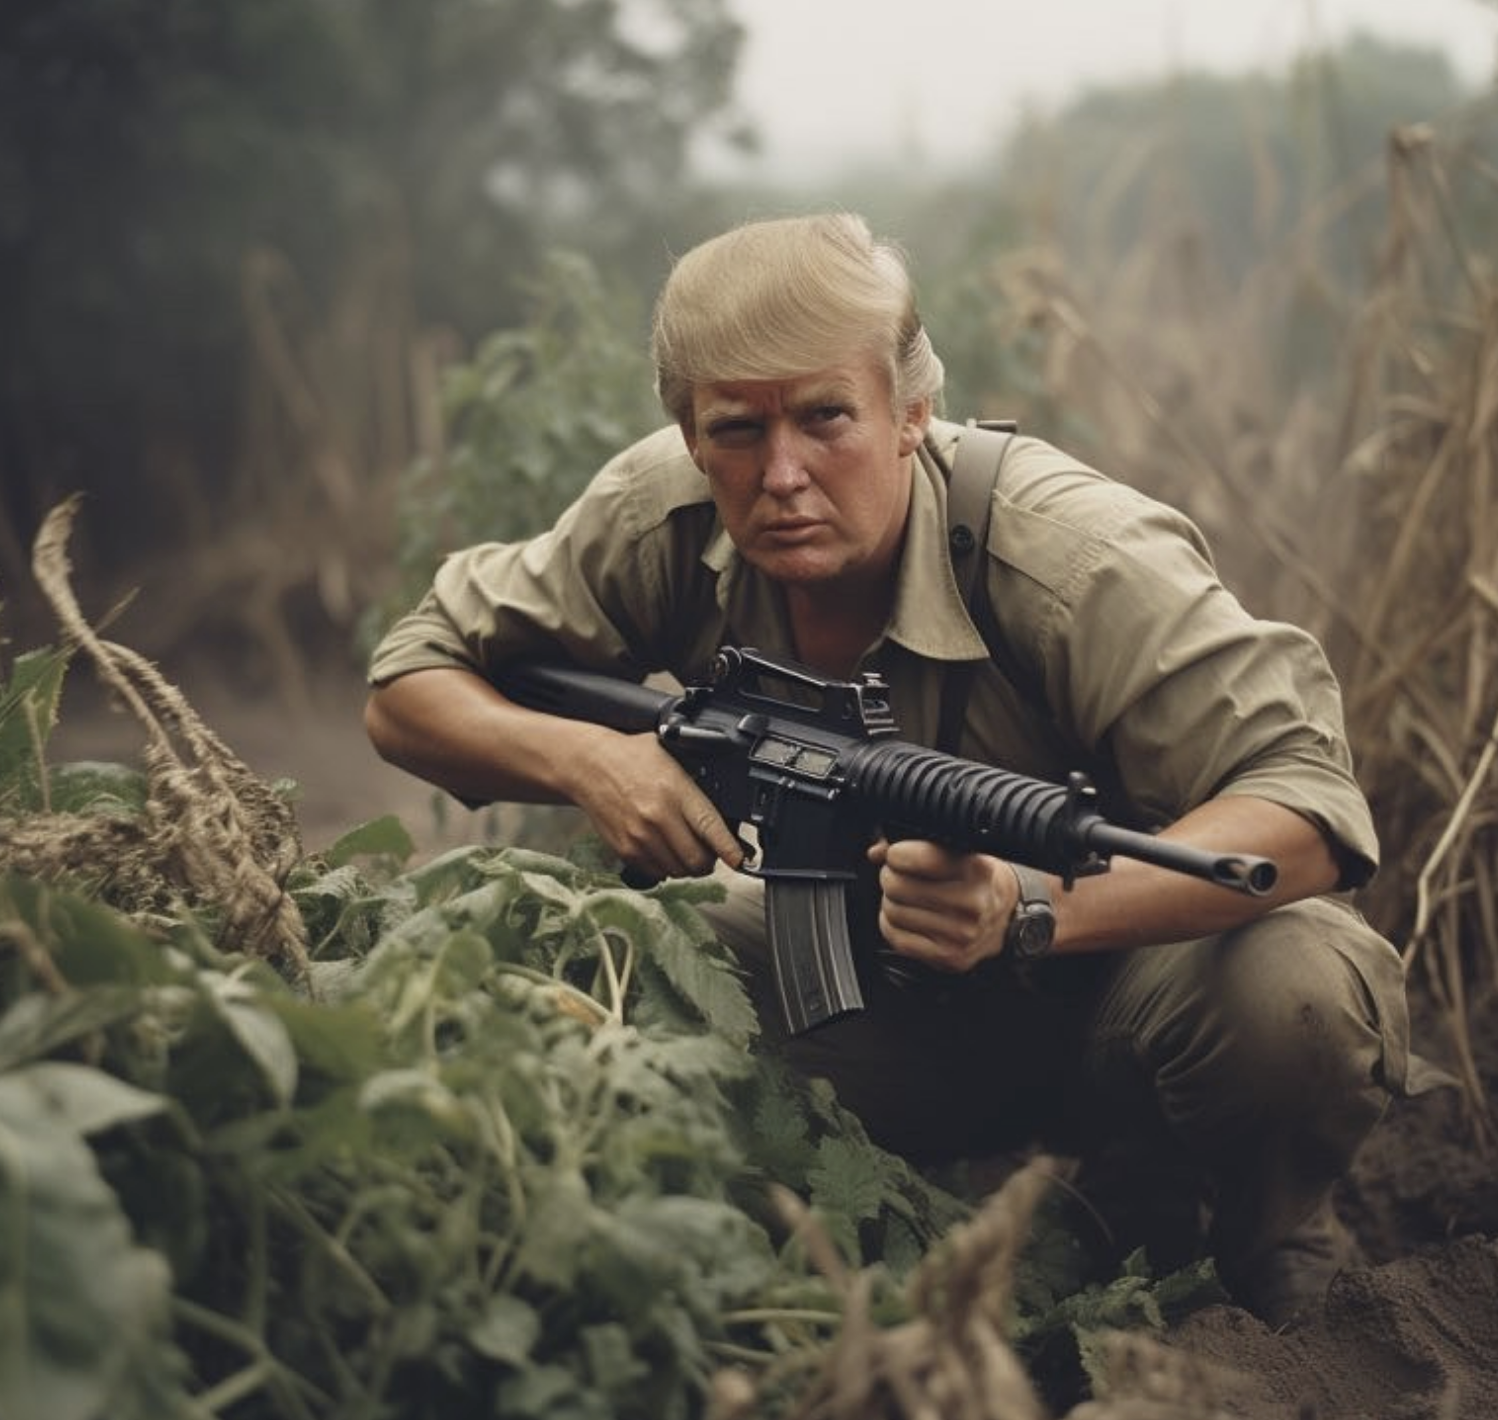 Trump hiding in the grass with a gun